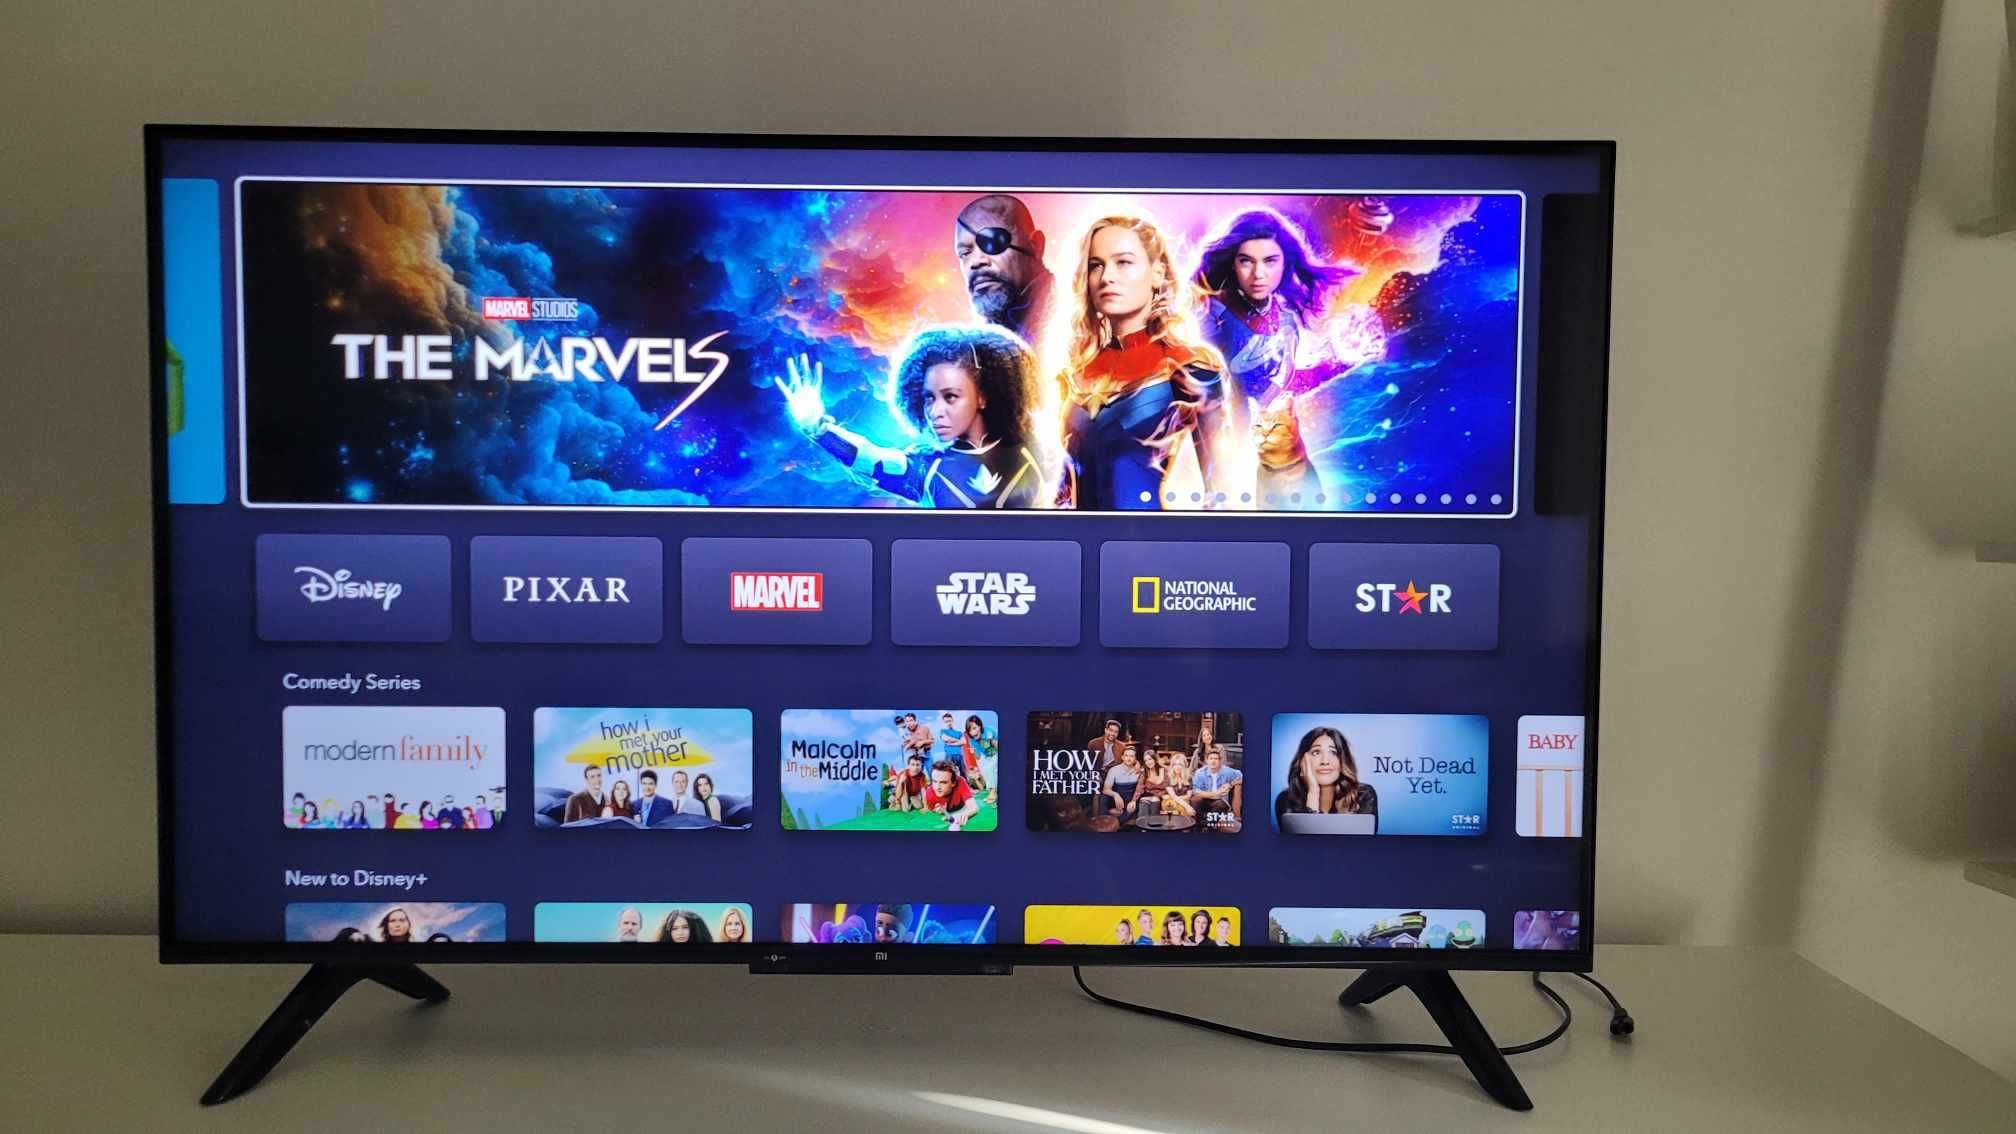 Android Smart TV 4K - Xiaomi MiTV-P143 / 108 cm / 43 inch